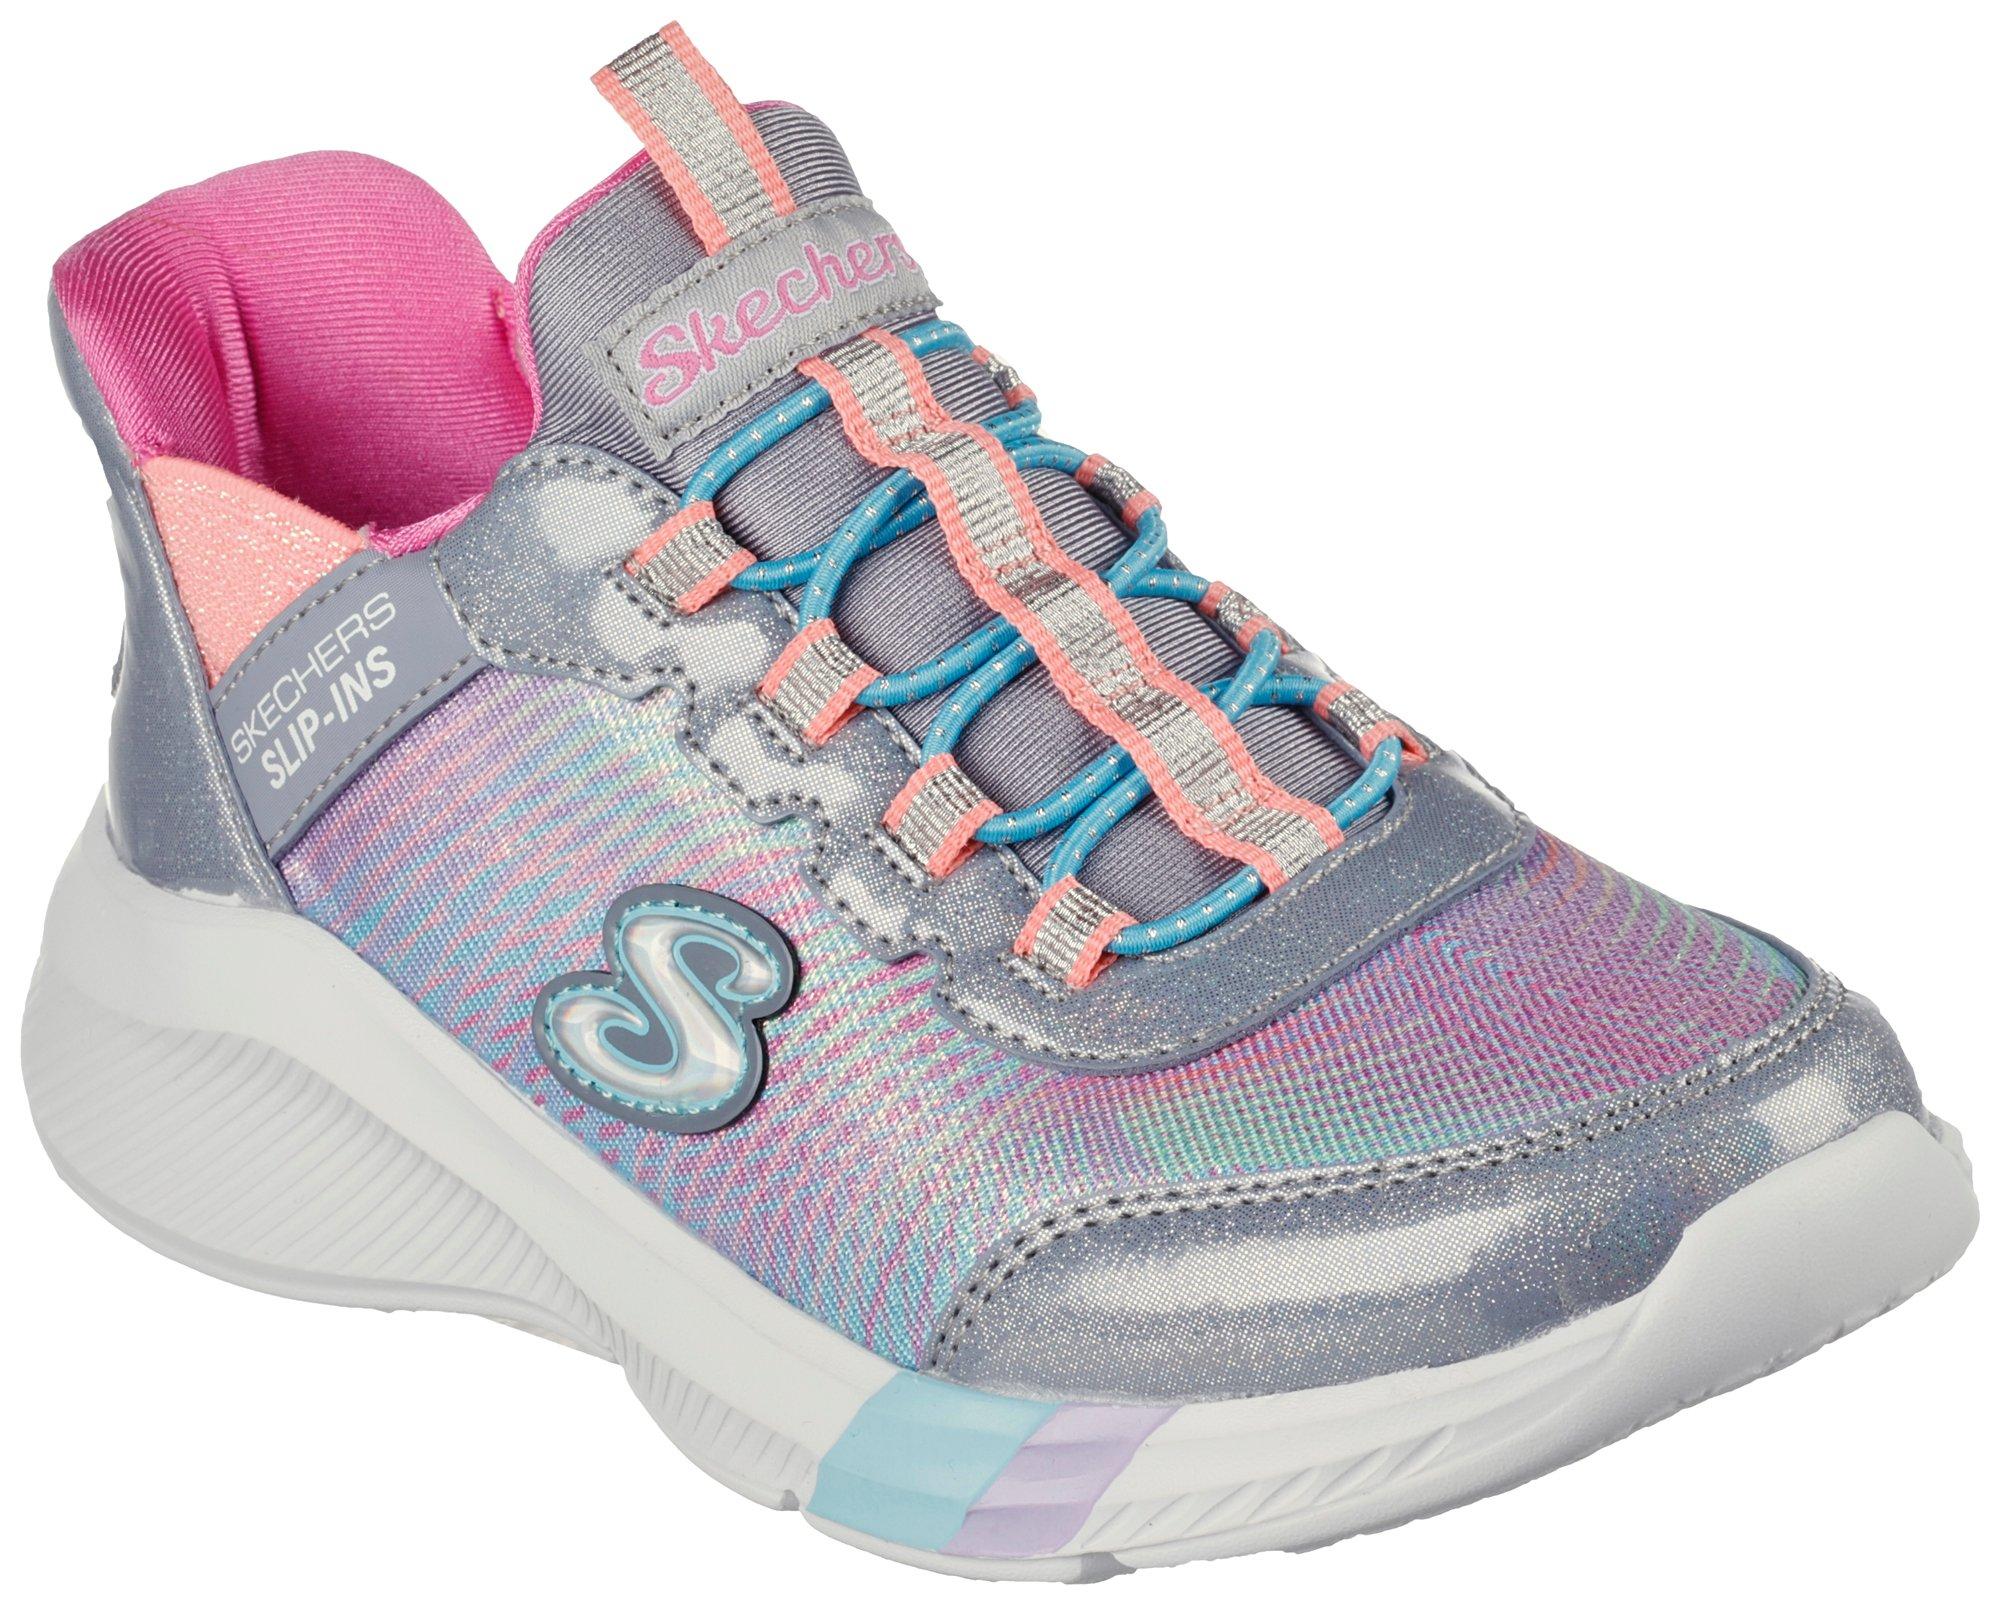 Skechers Girls Slip-ins Dreamy Lites Colorful Prism Shoes